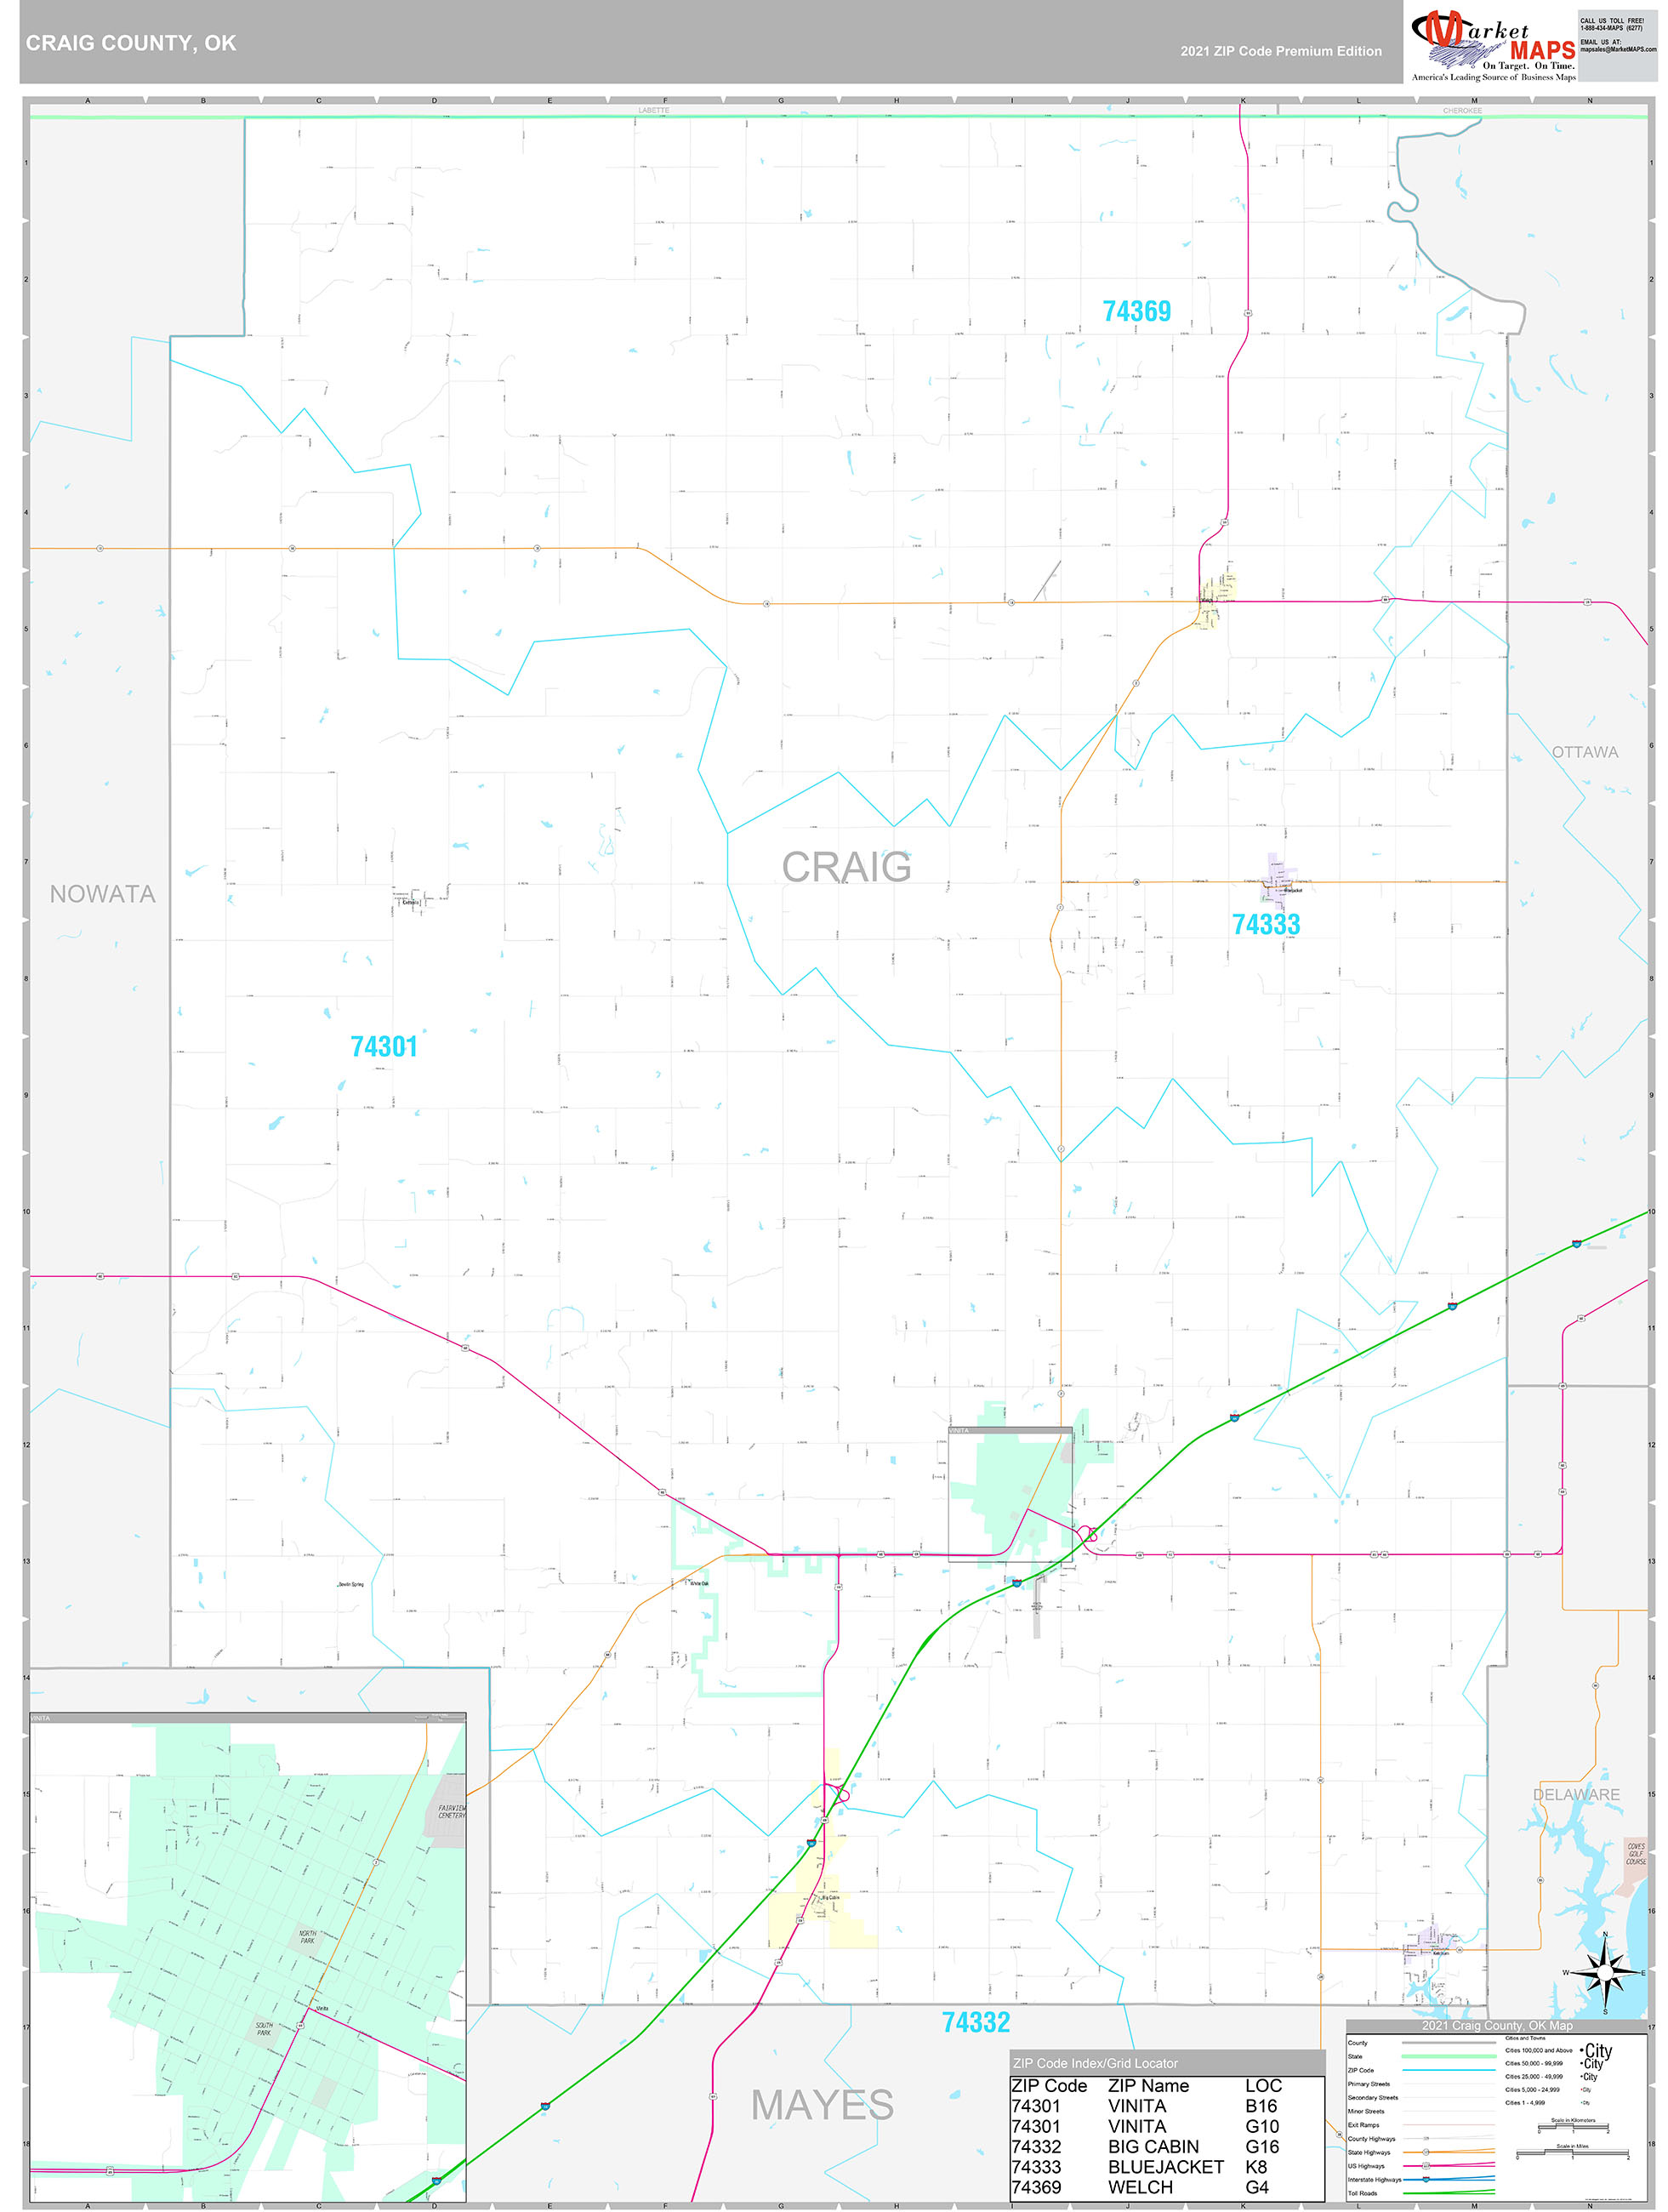 Craig County, OK Wall Map Premium Style by MarketMAPS - MapSales.com